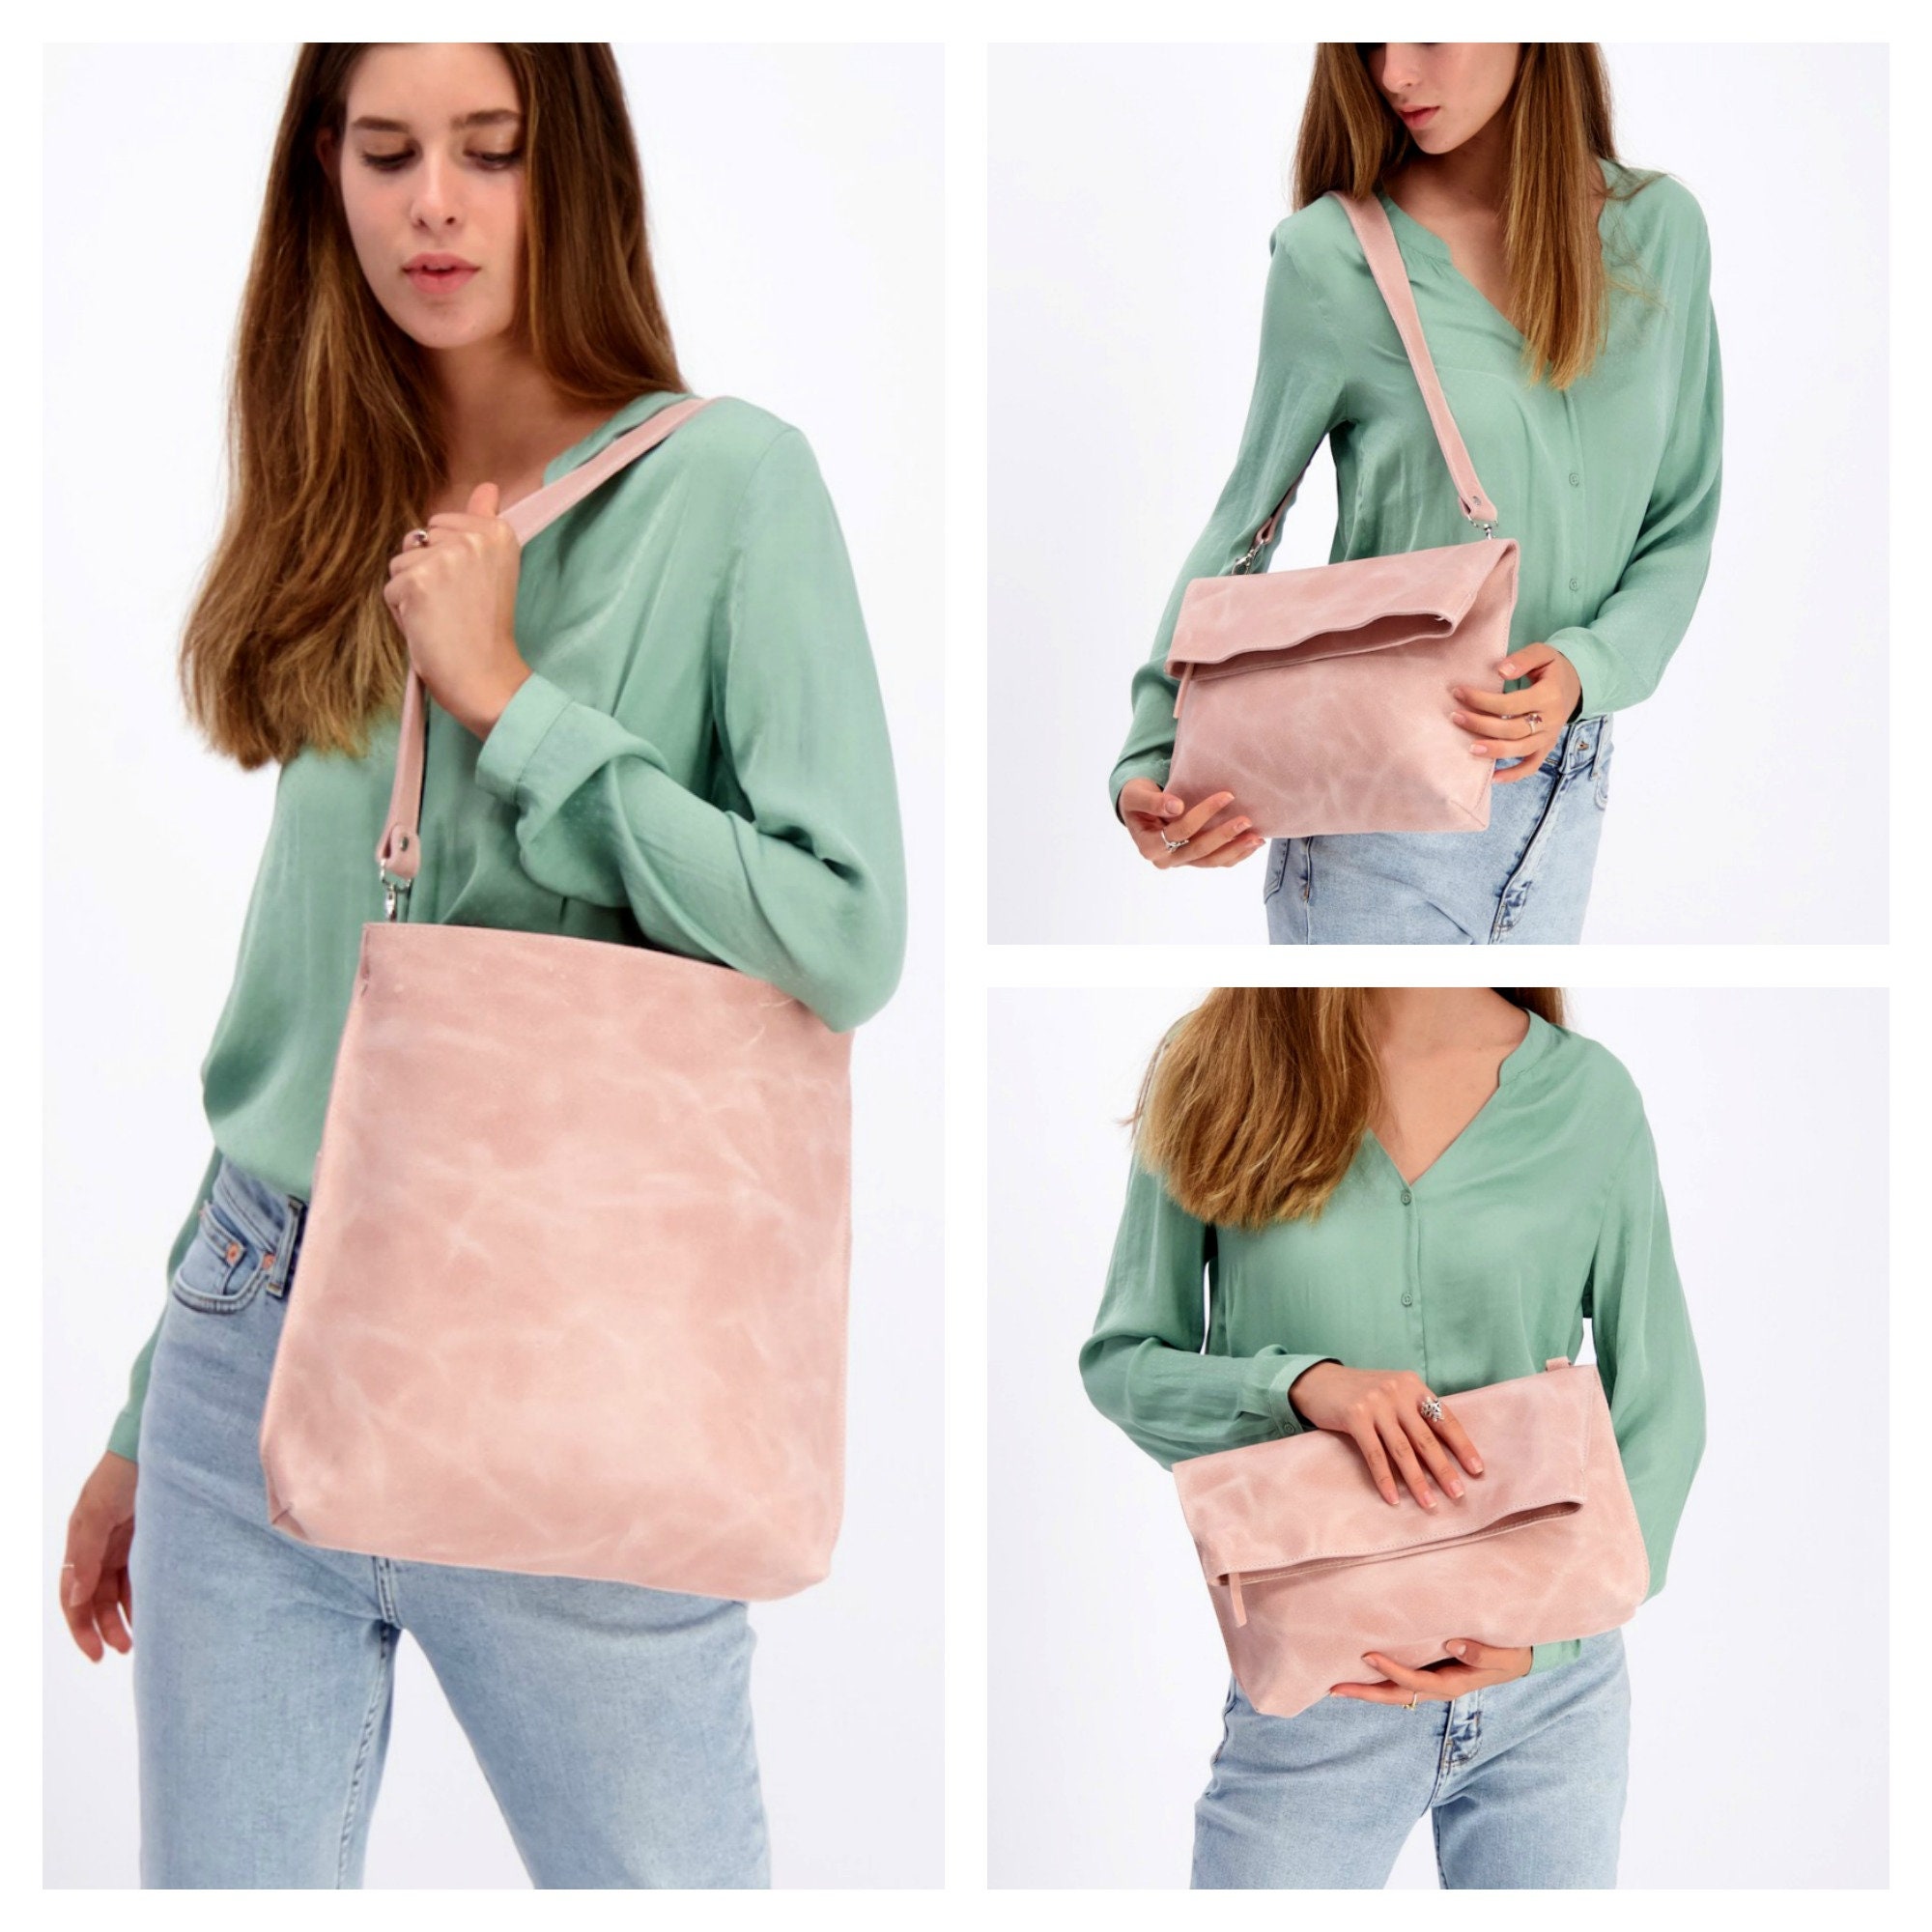 Mayko Bags Pink Color Italian Leather Crossbody Mini Bag